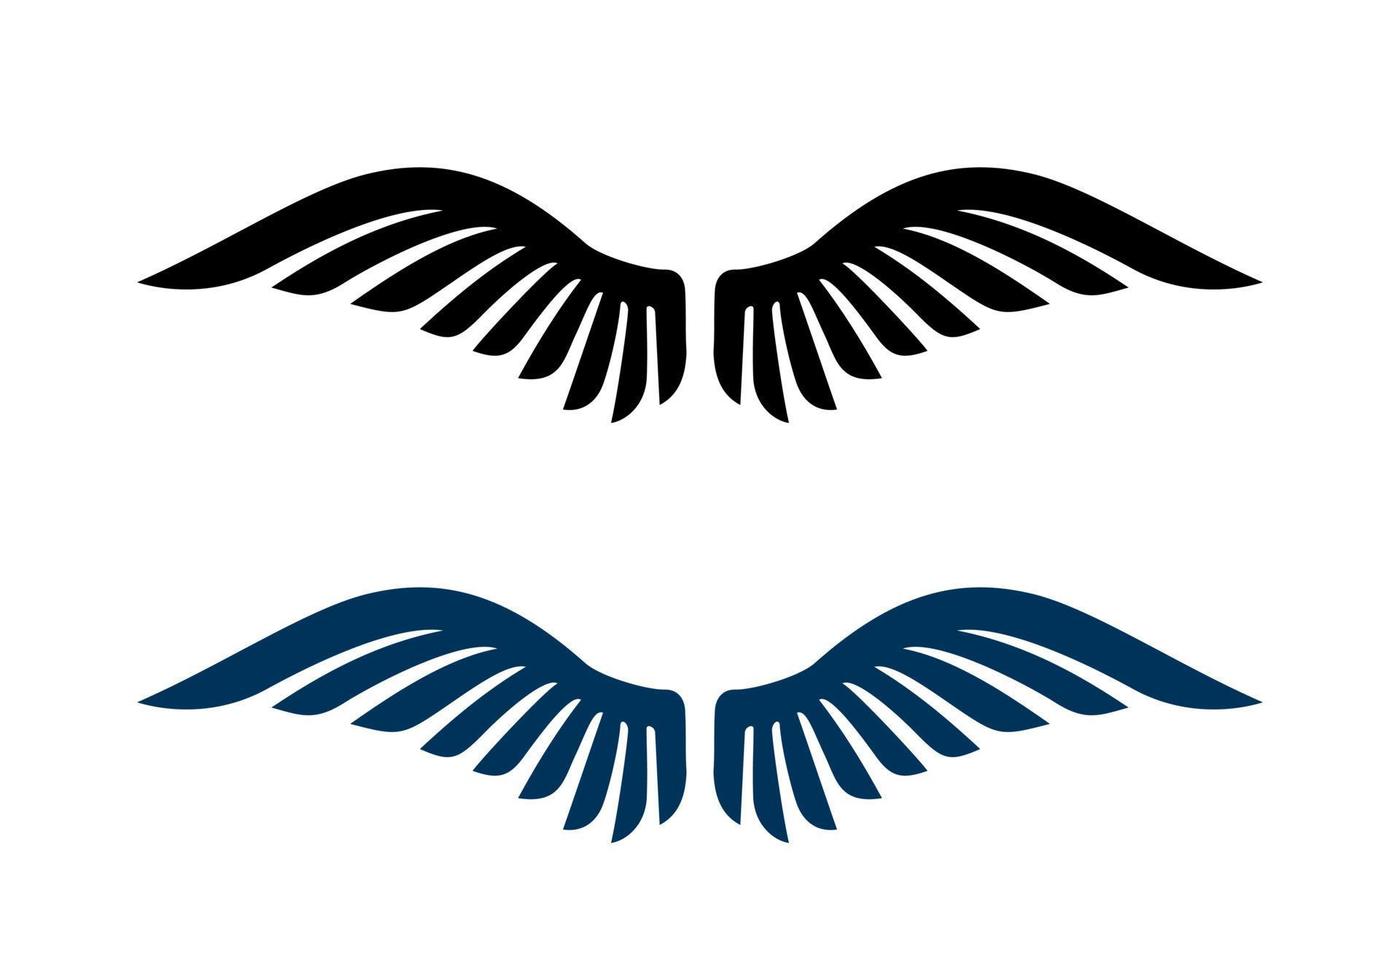 icono de ala. empresa de logo de ala. diseño de vector de ala. concepto de diseño de ala animal, par de ala vectorial aislado negro sobre fondo blanco